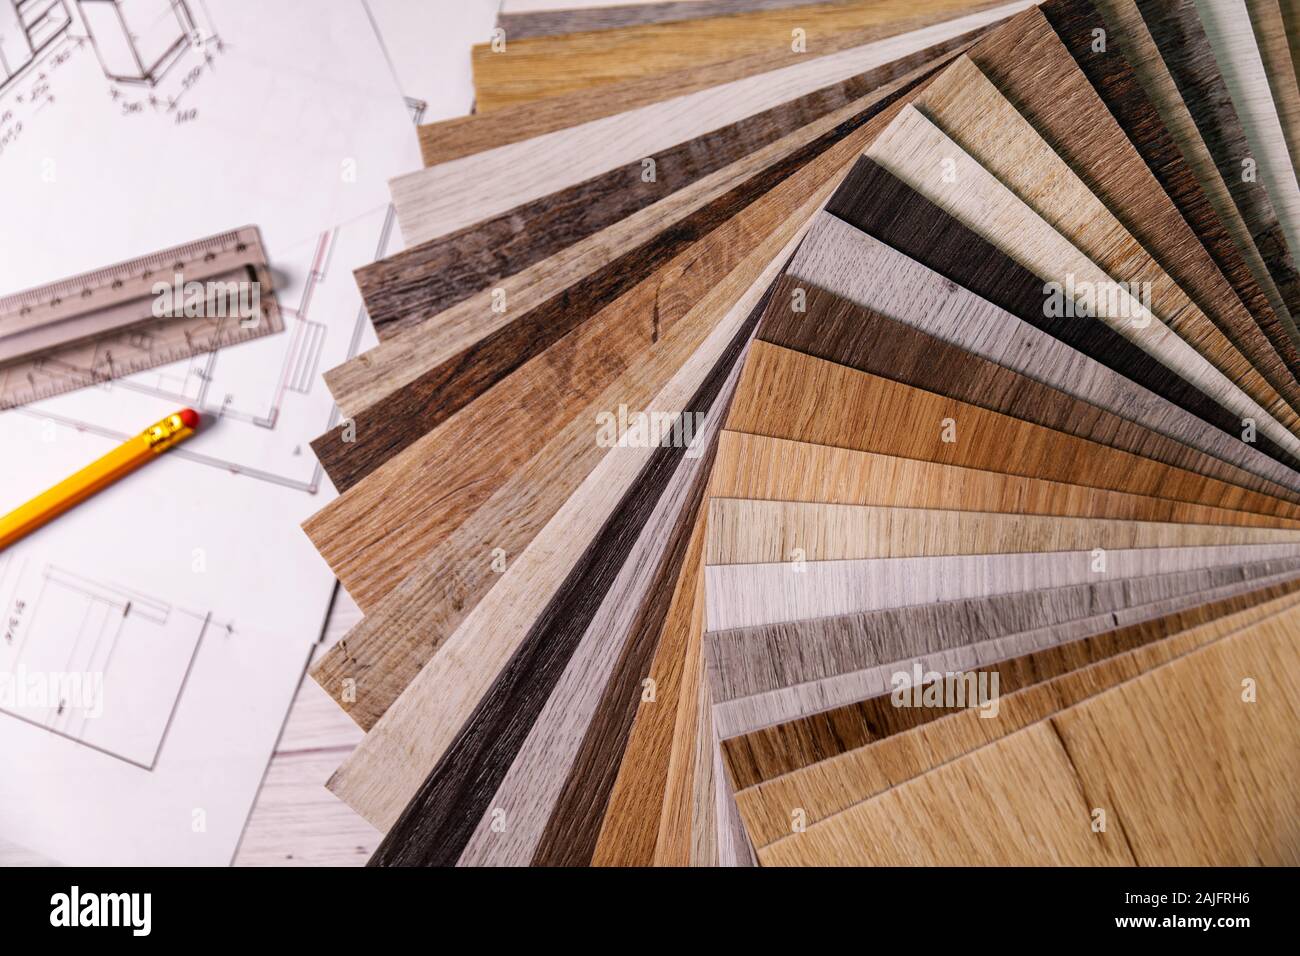 furniture laminate material samples and interior design plans Stock Photo